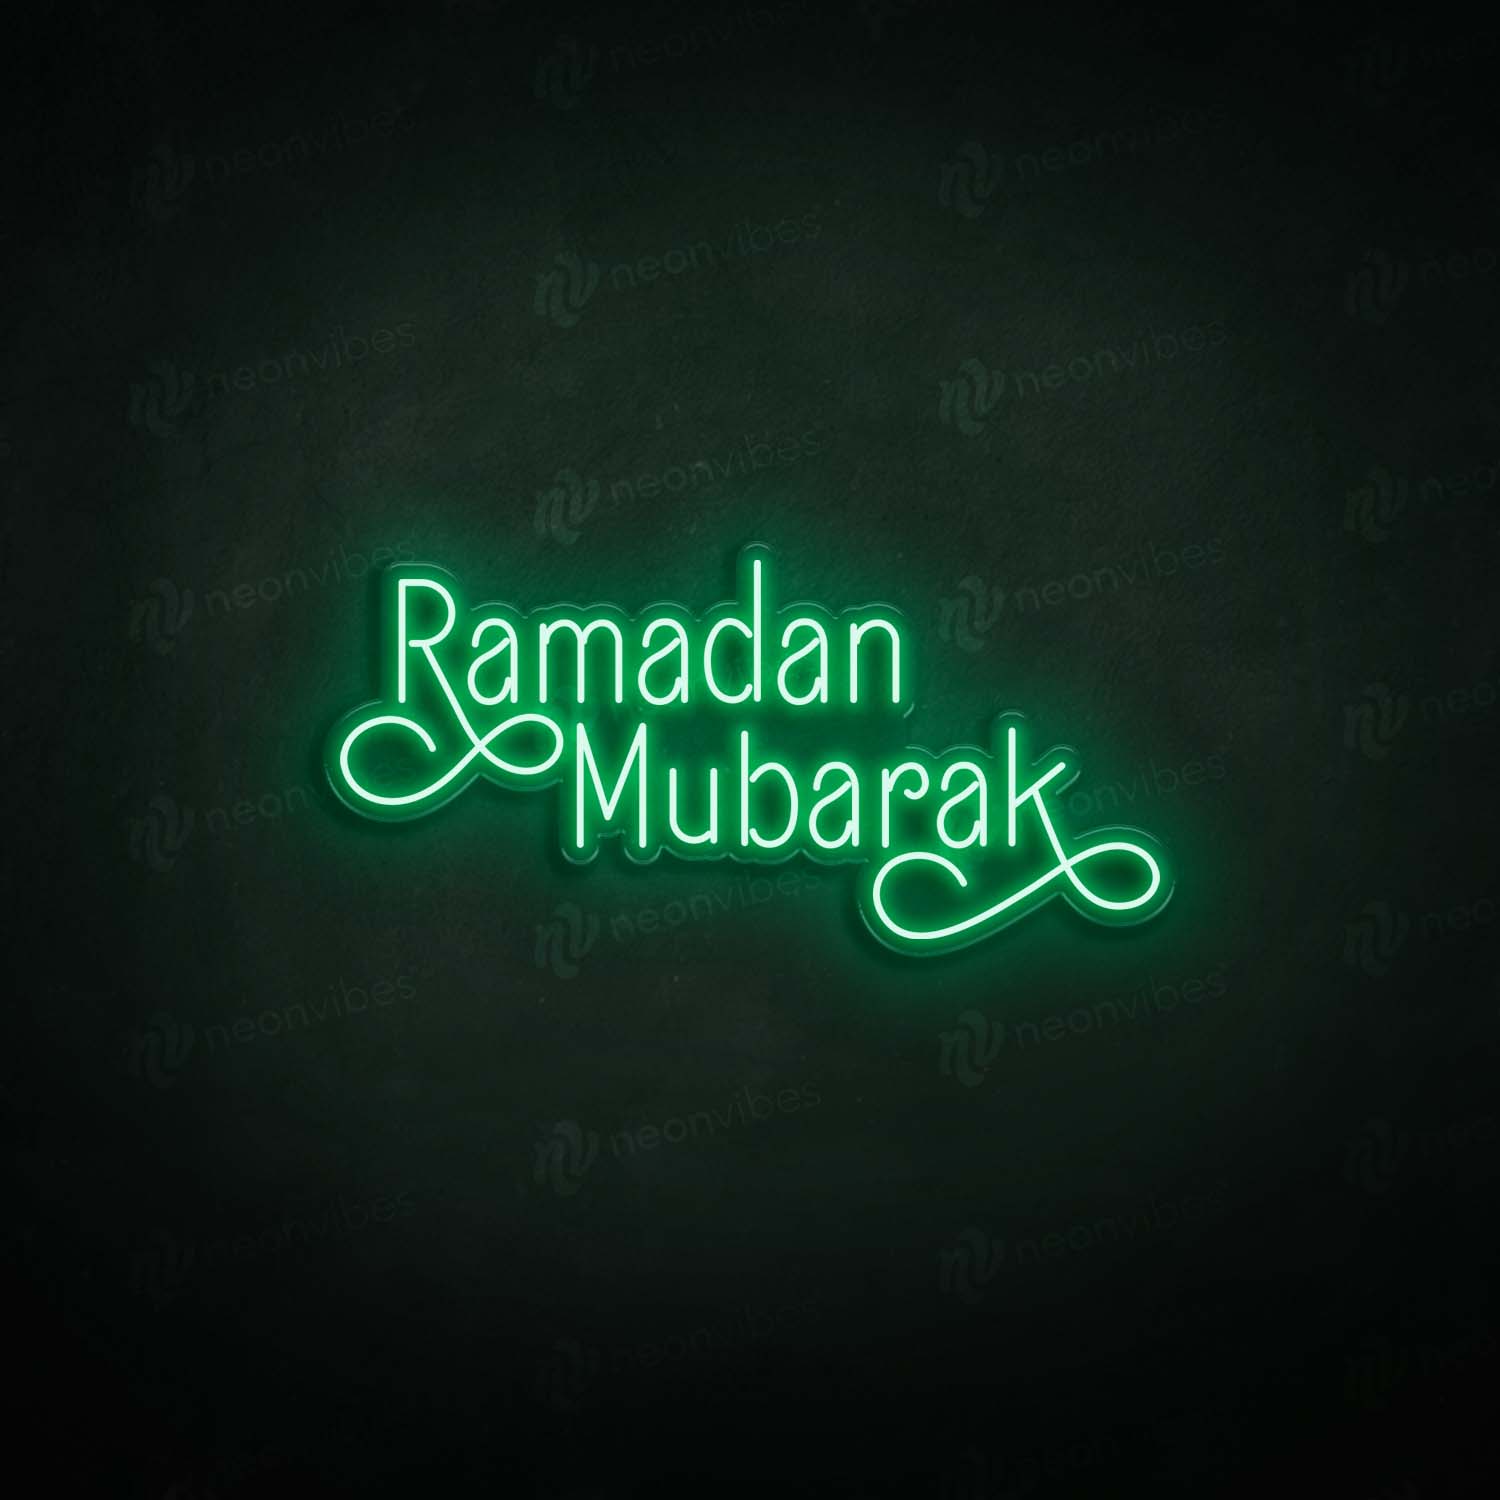 Ramadan Mubarak neon sign